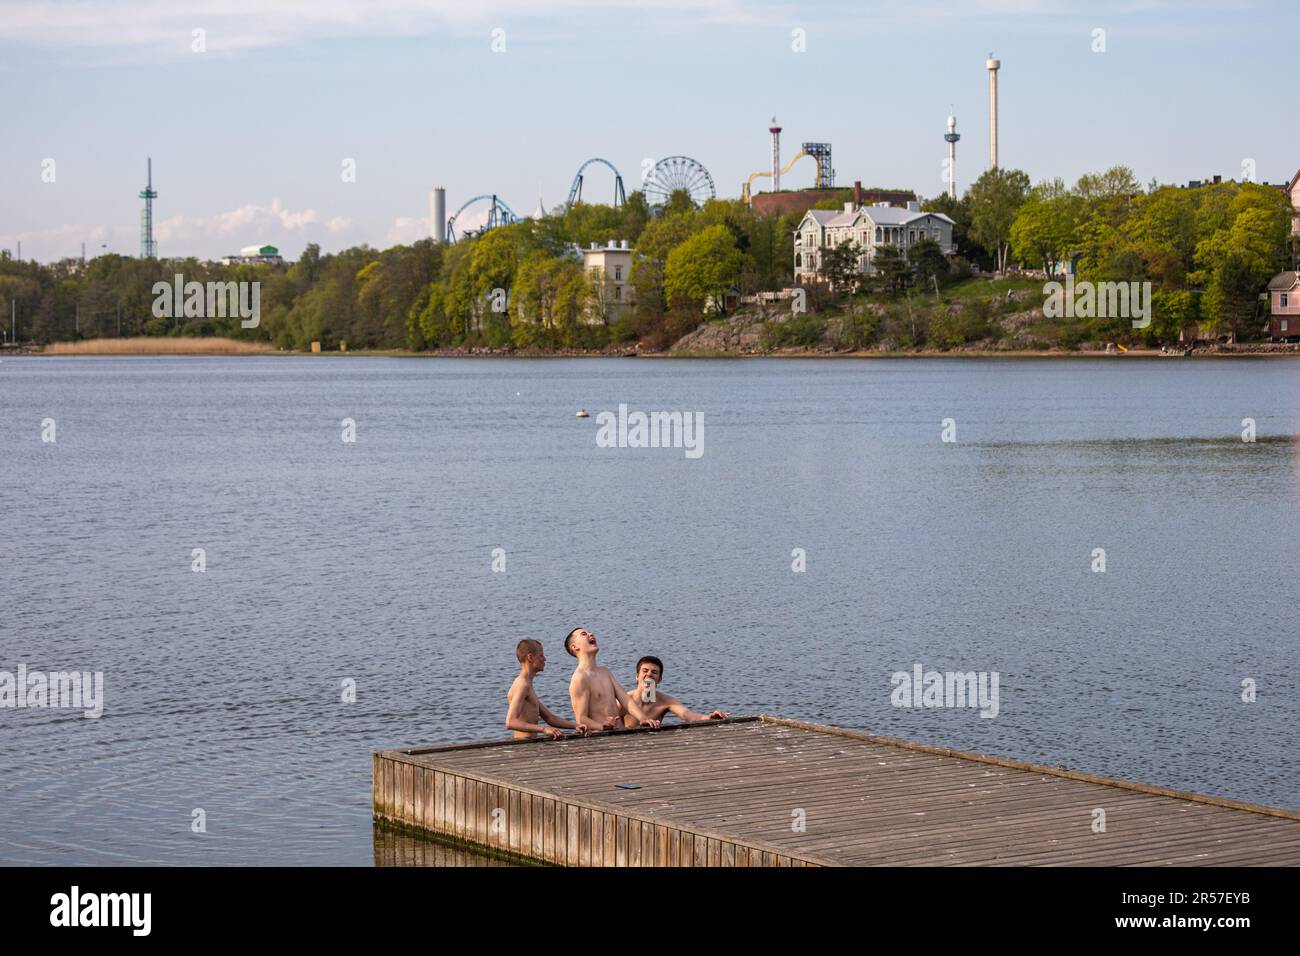 Teenage boys standing in cold water in Töölönlahti Bay, Helsinki, Finland Stock Photo